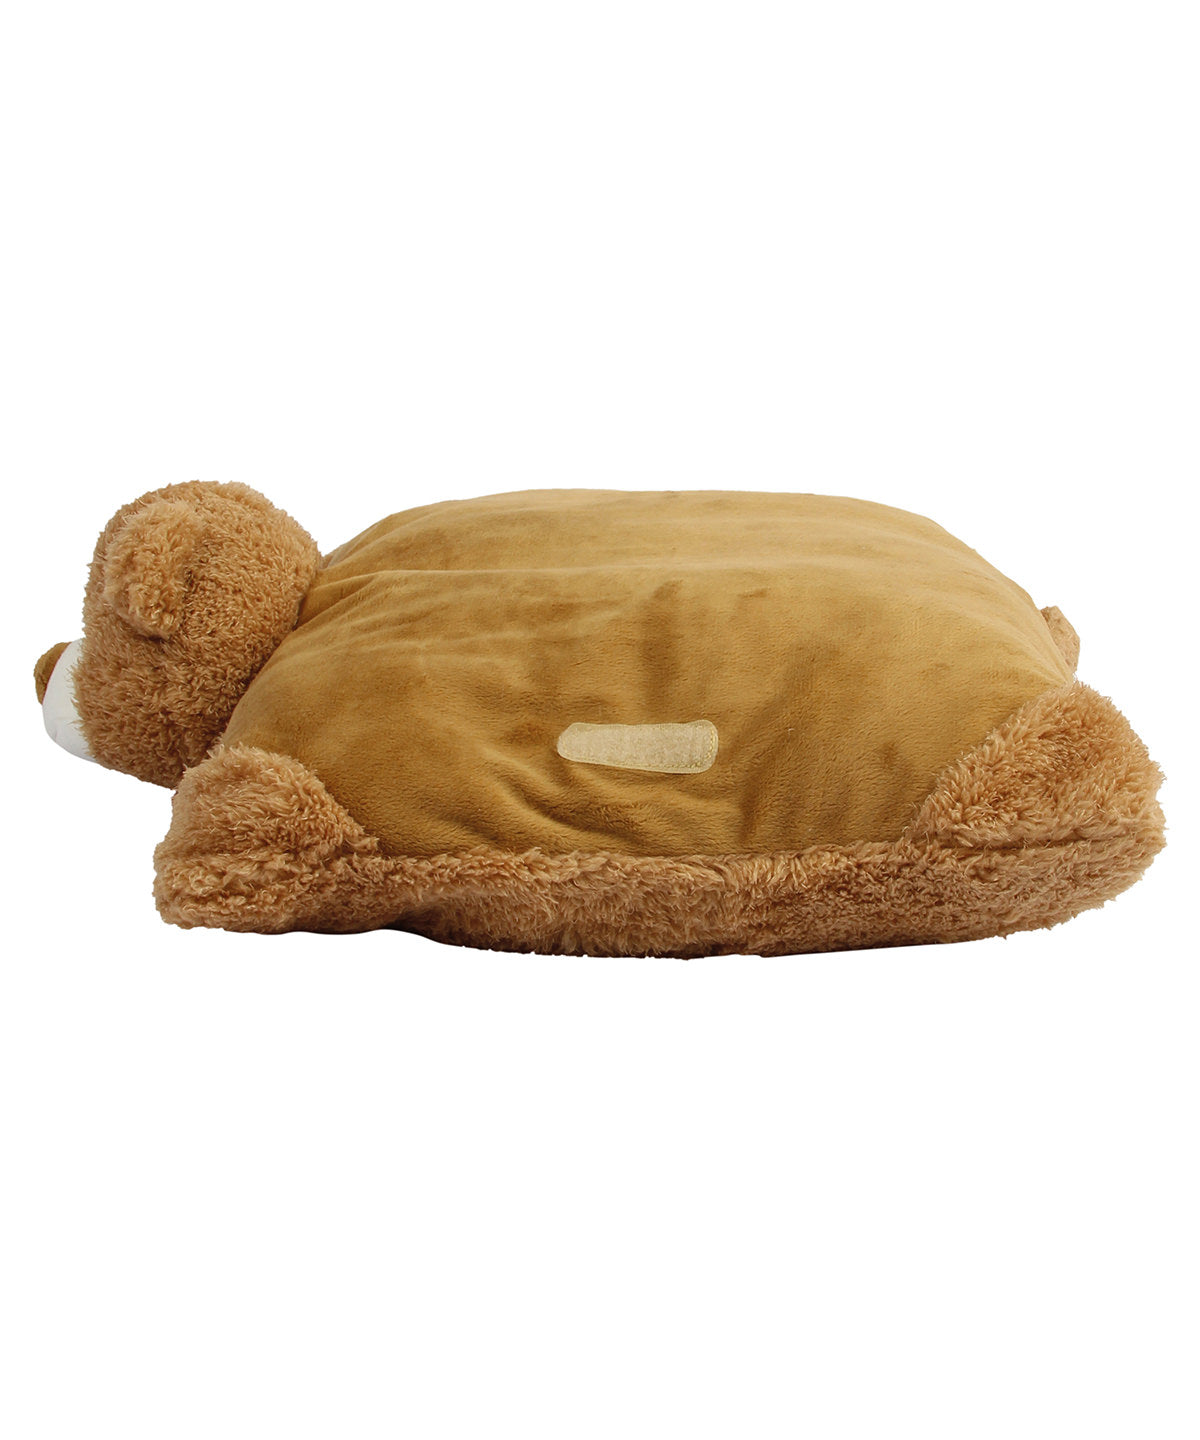 Personalised Bear Cushion